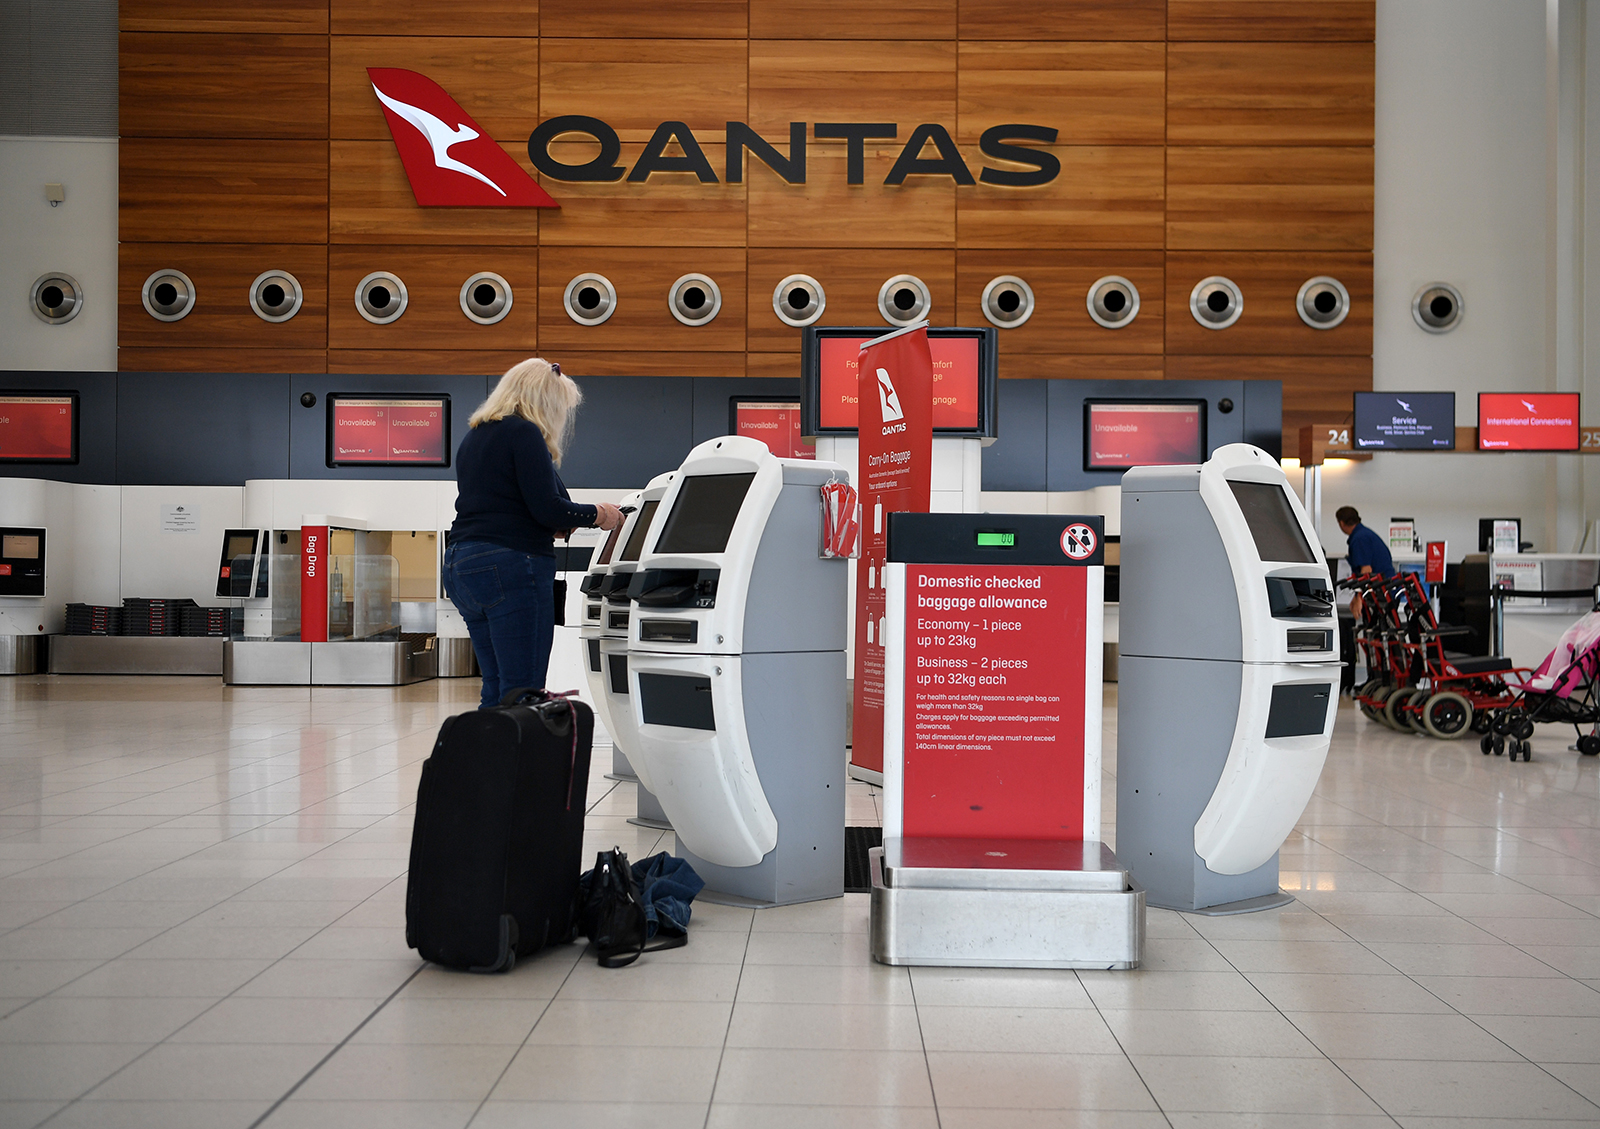 qantas travel contact